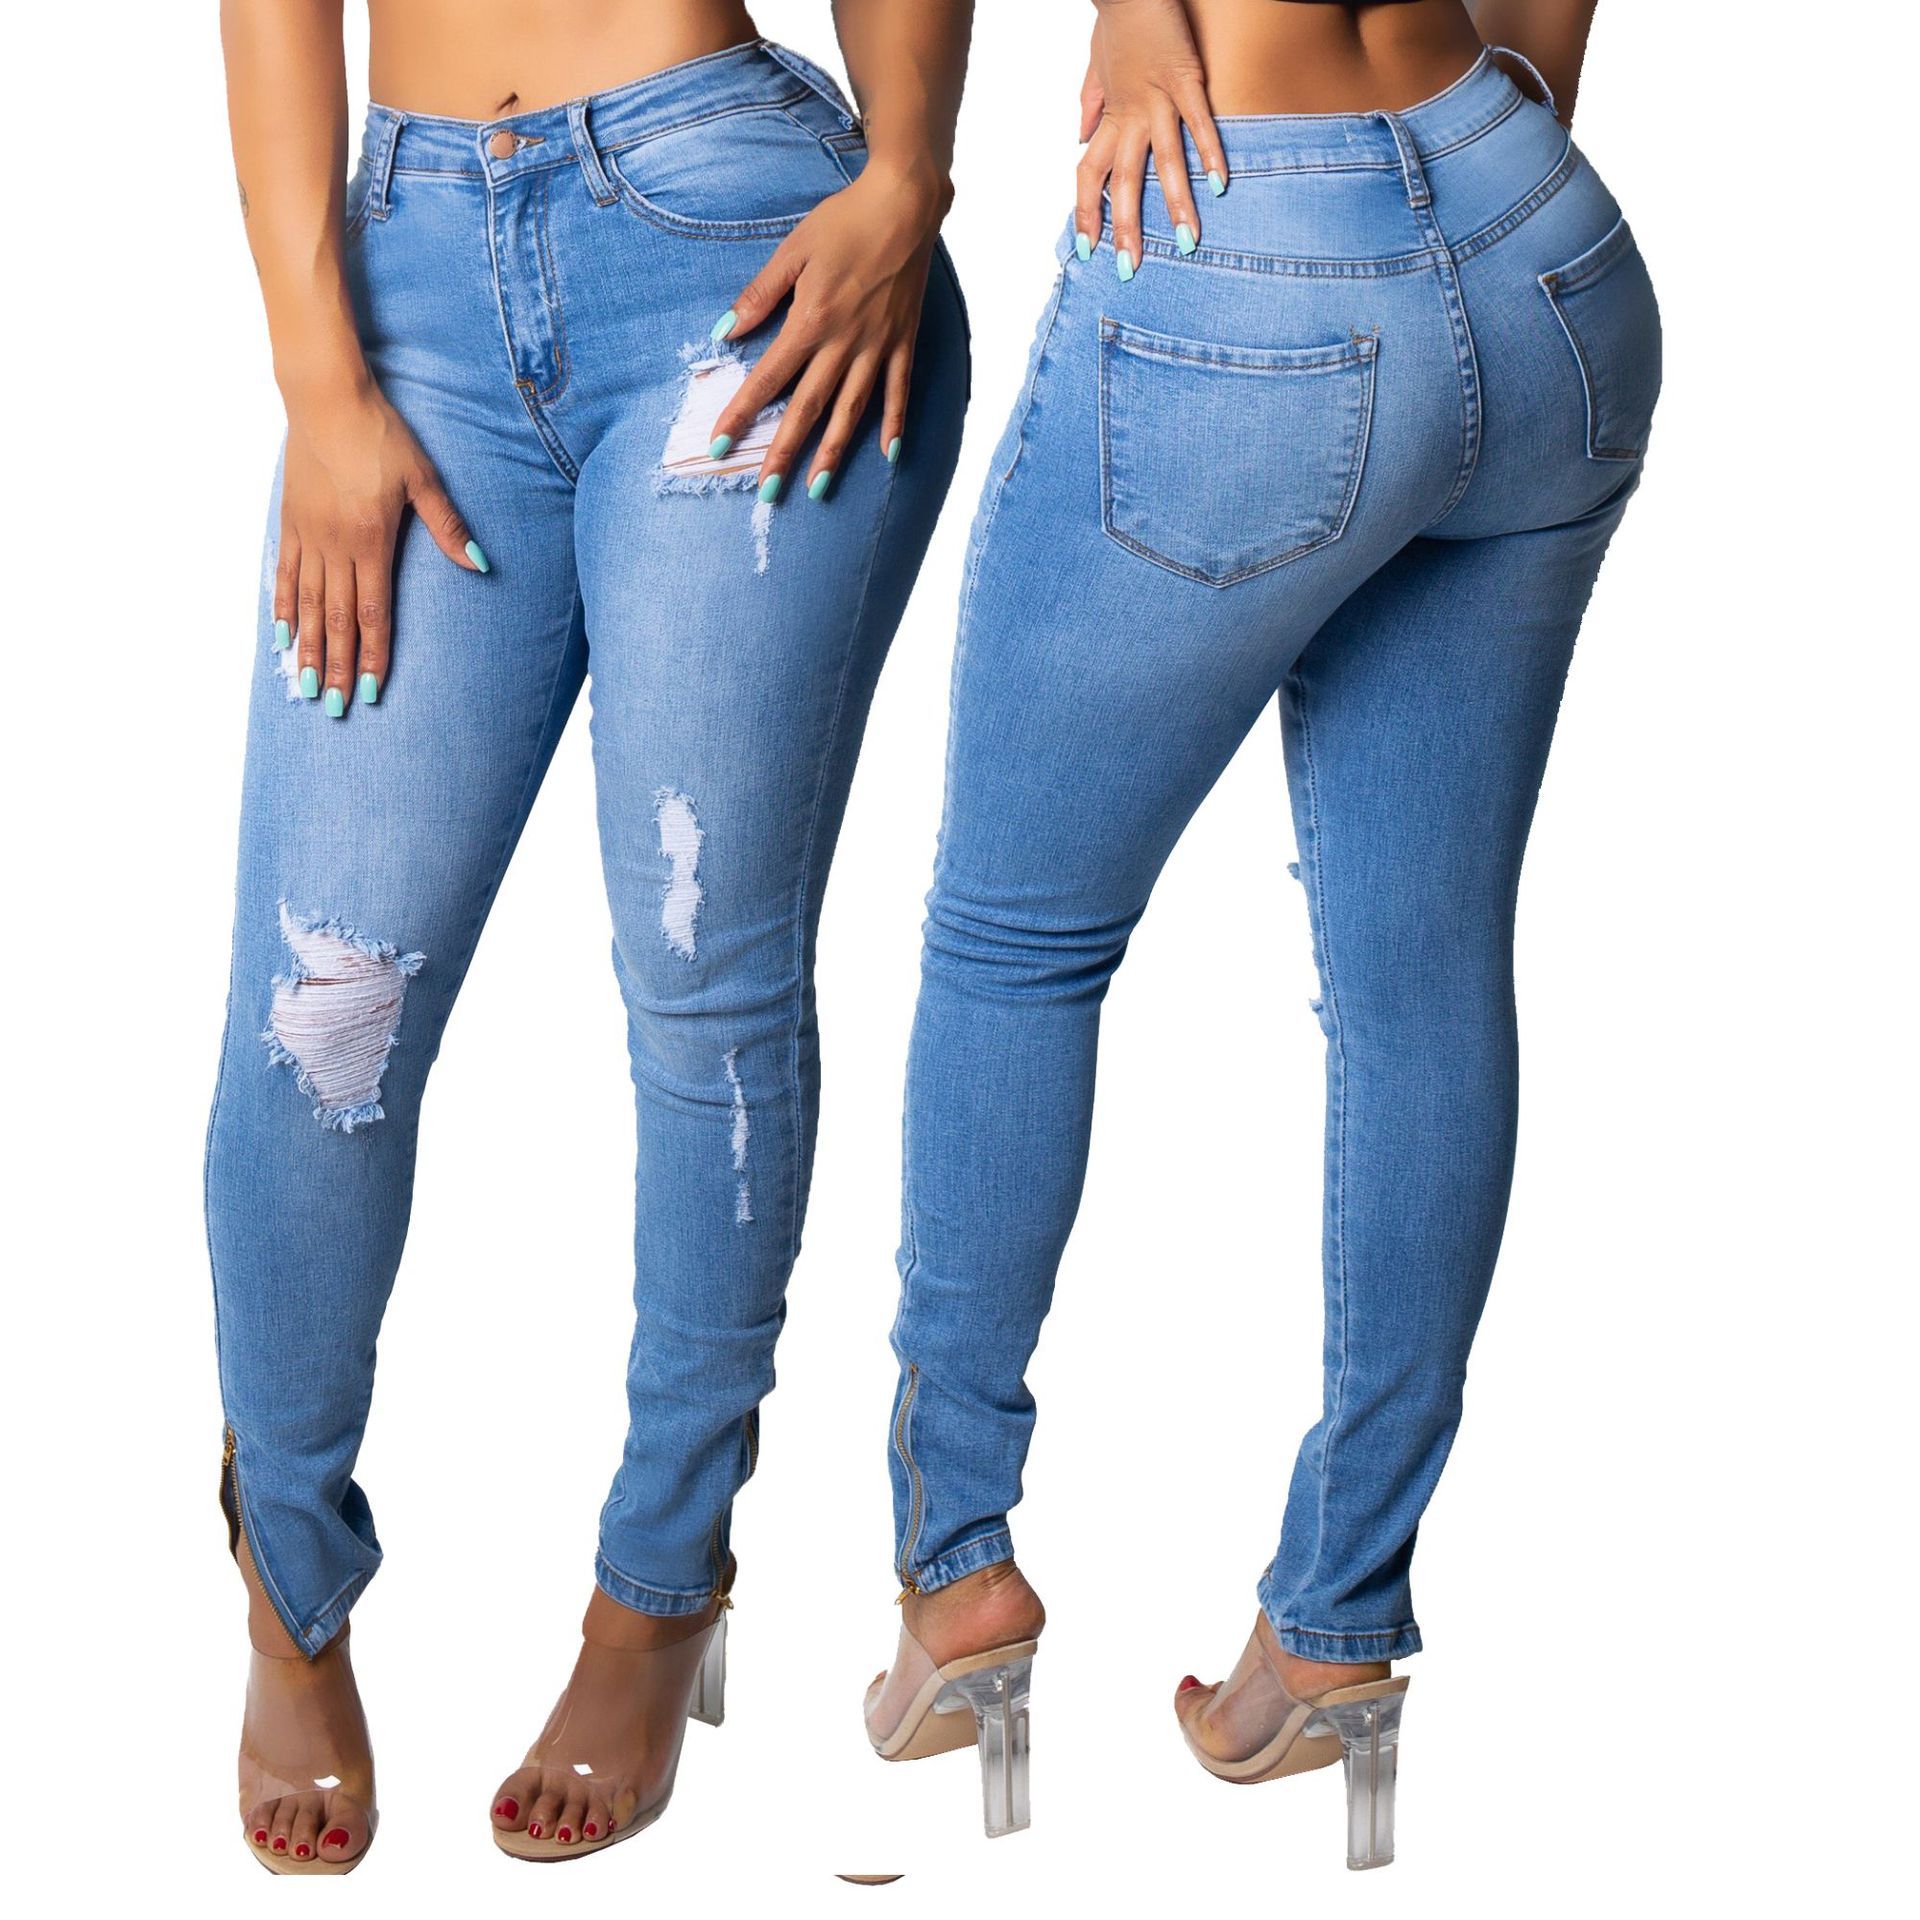 calça jeans skinning feminina cintura alta